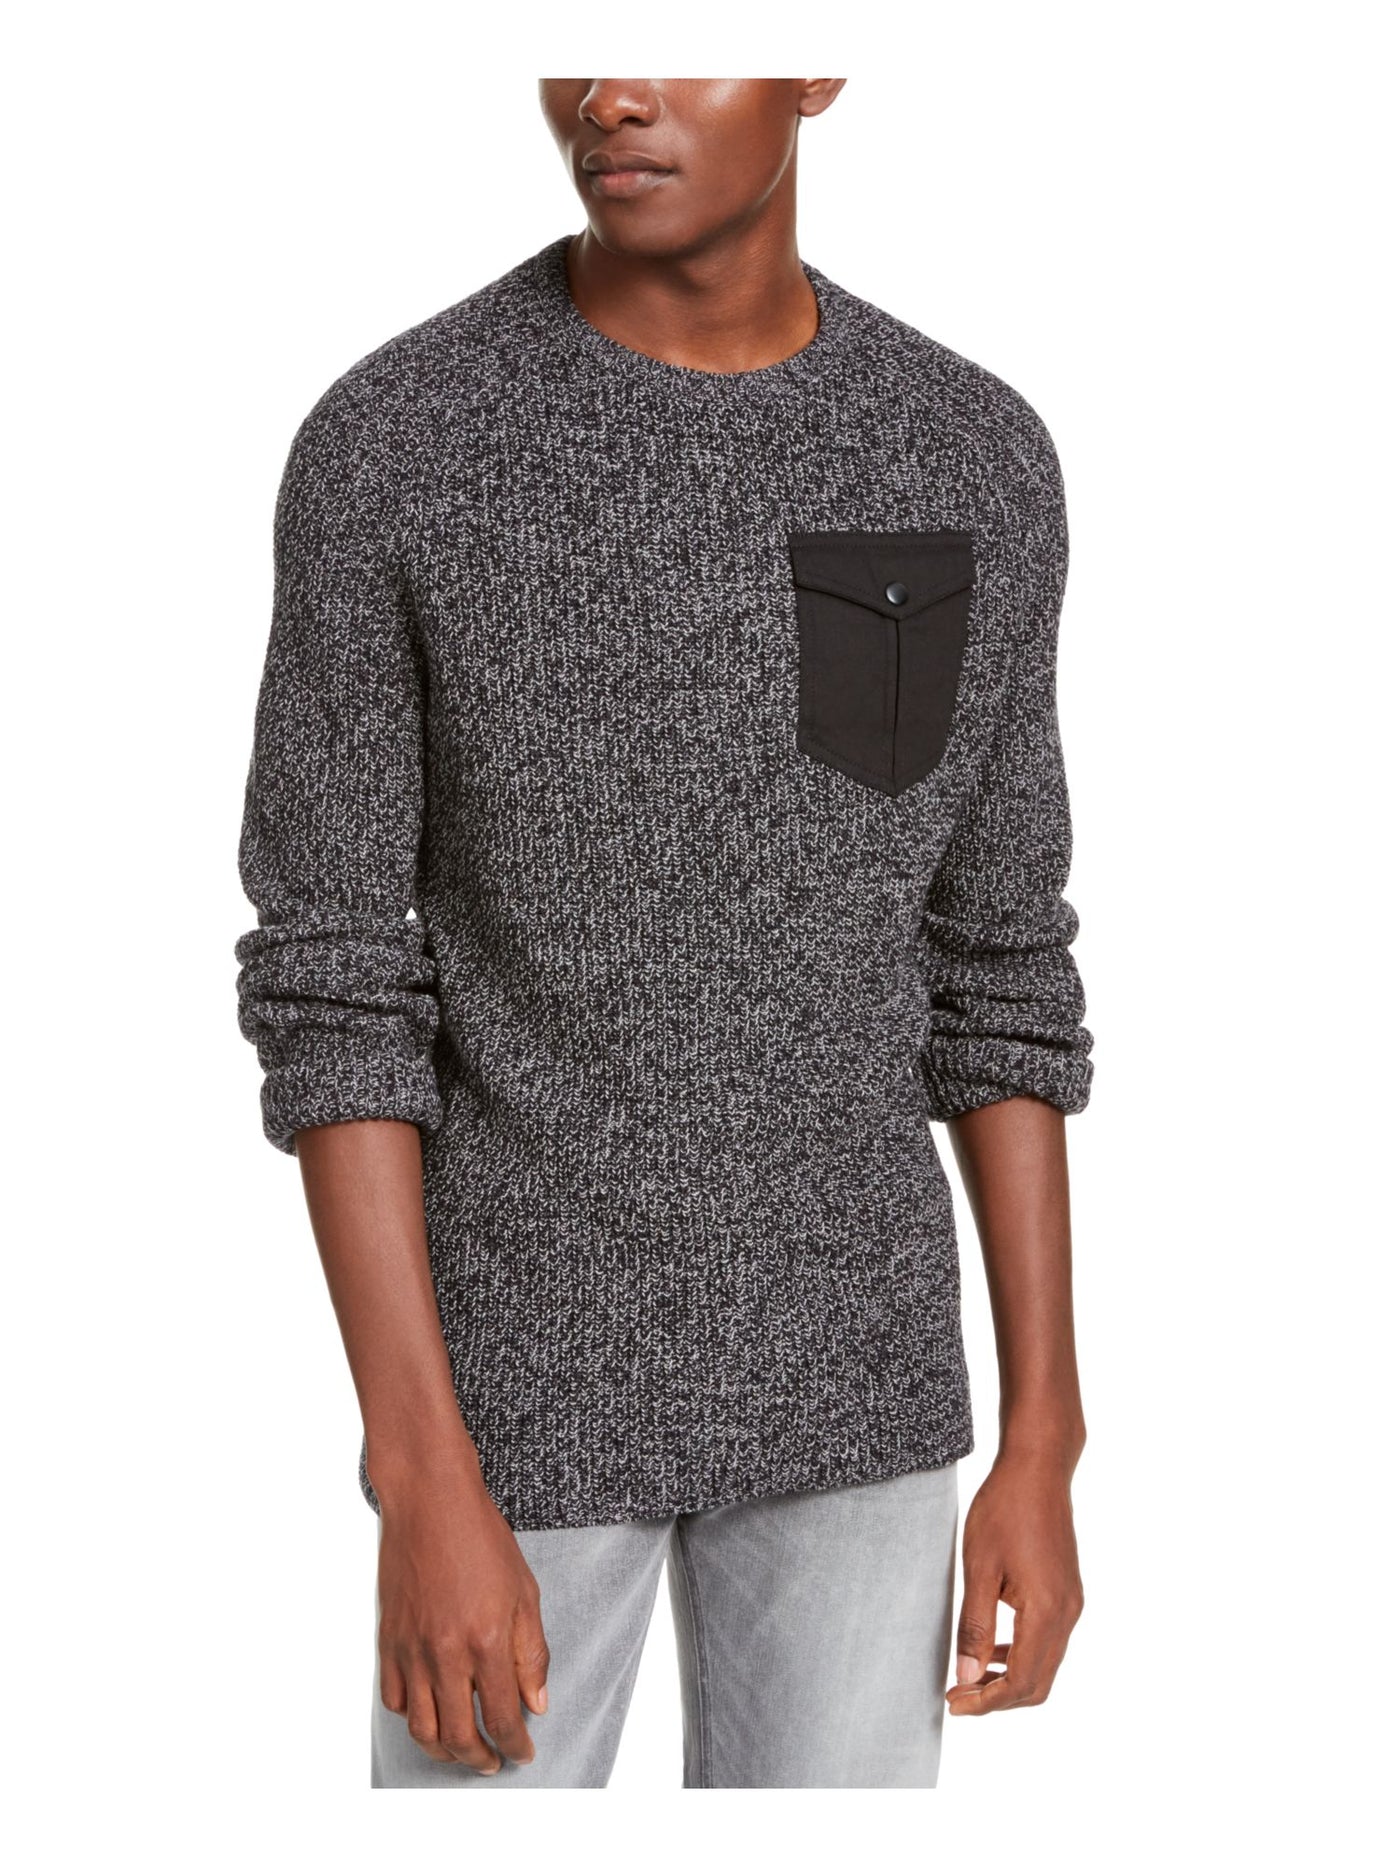 AMERICAN RAG Mens Black Pocket T-Shirt, Herringbone Sweater Juniors XXL